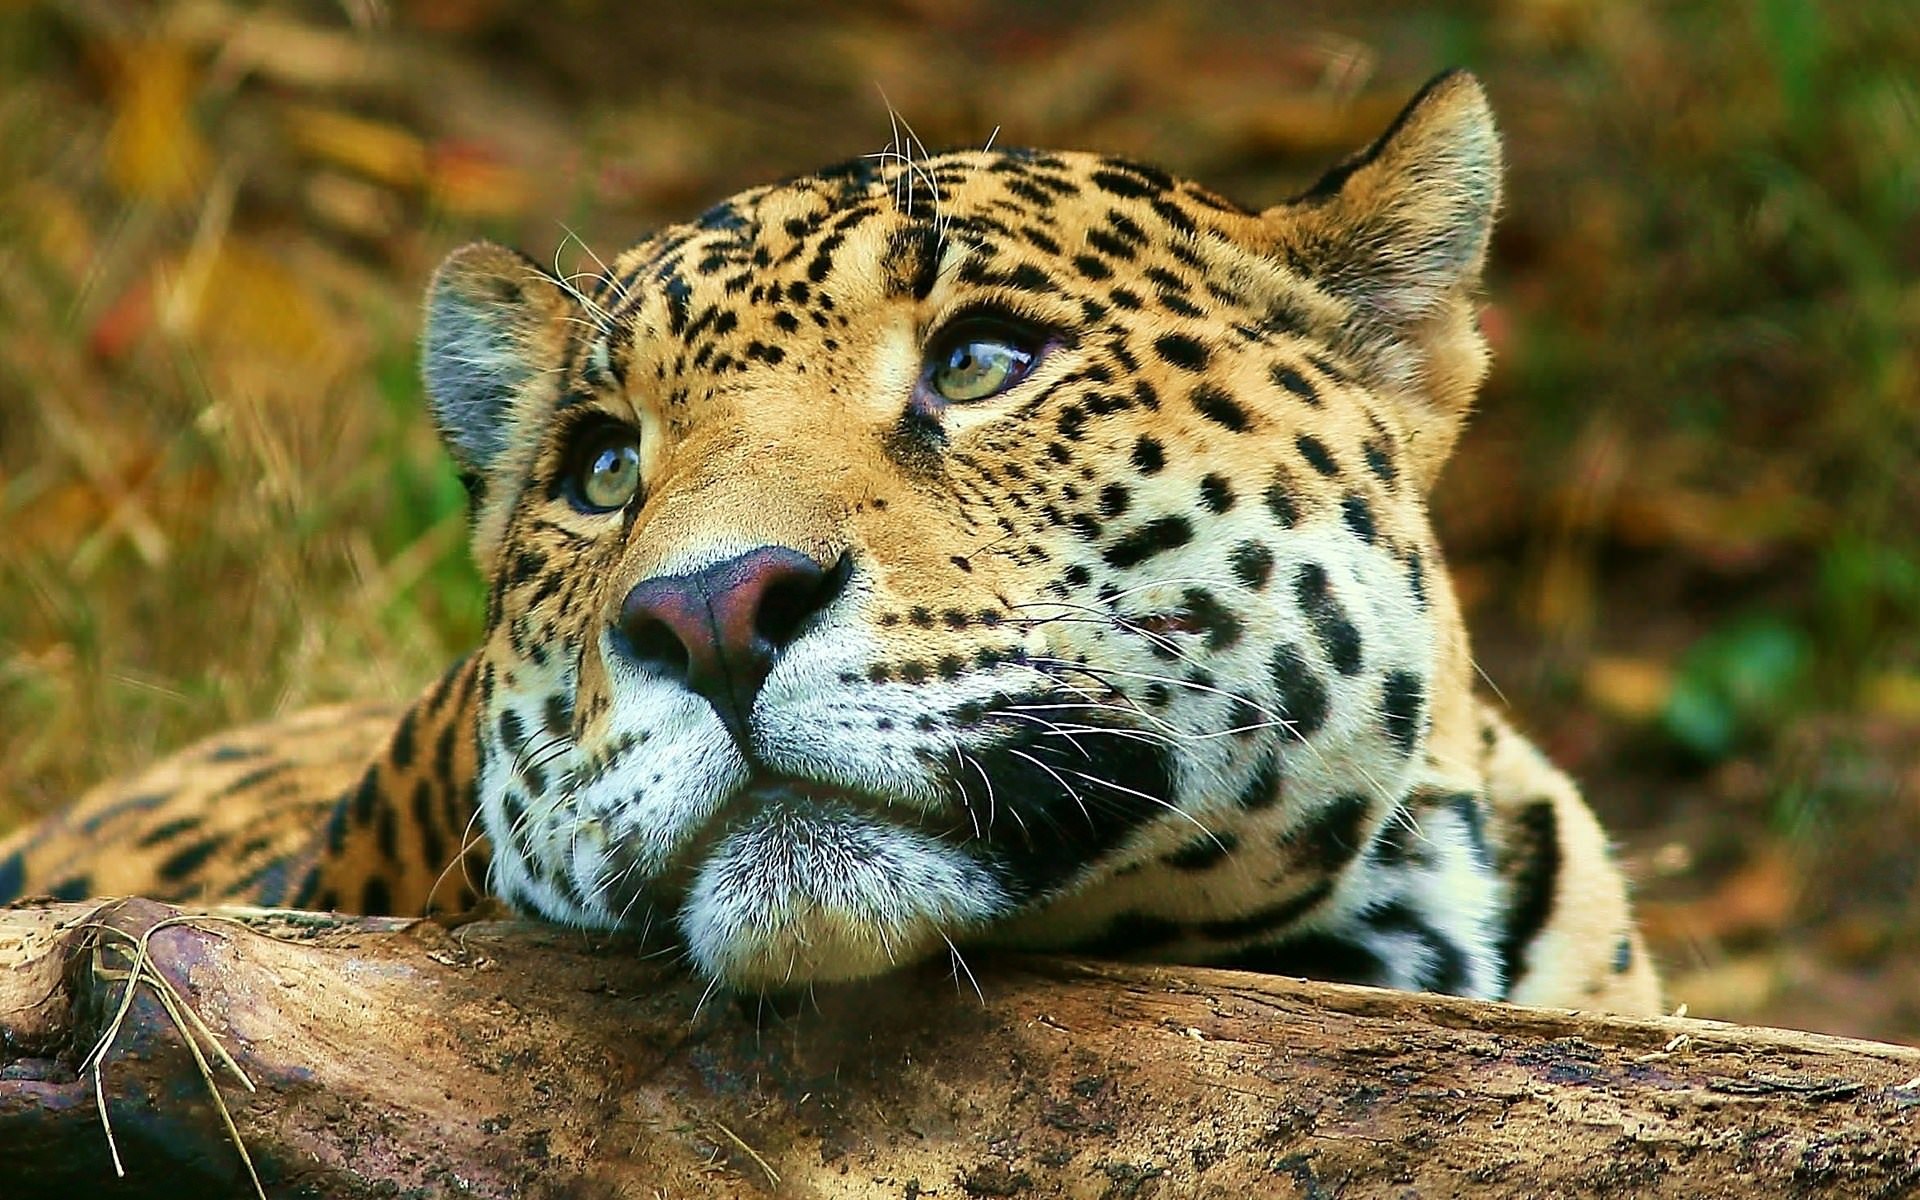 Leopards regard